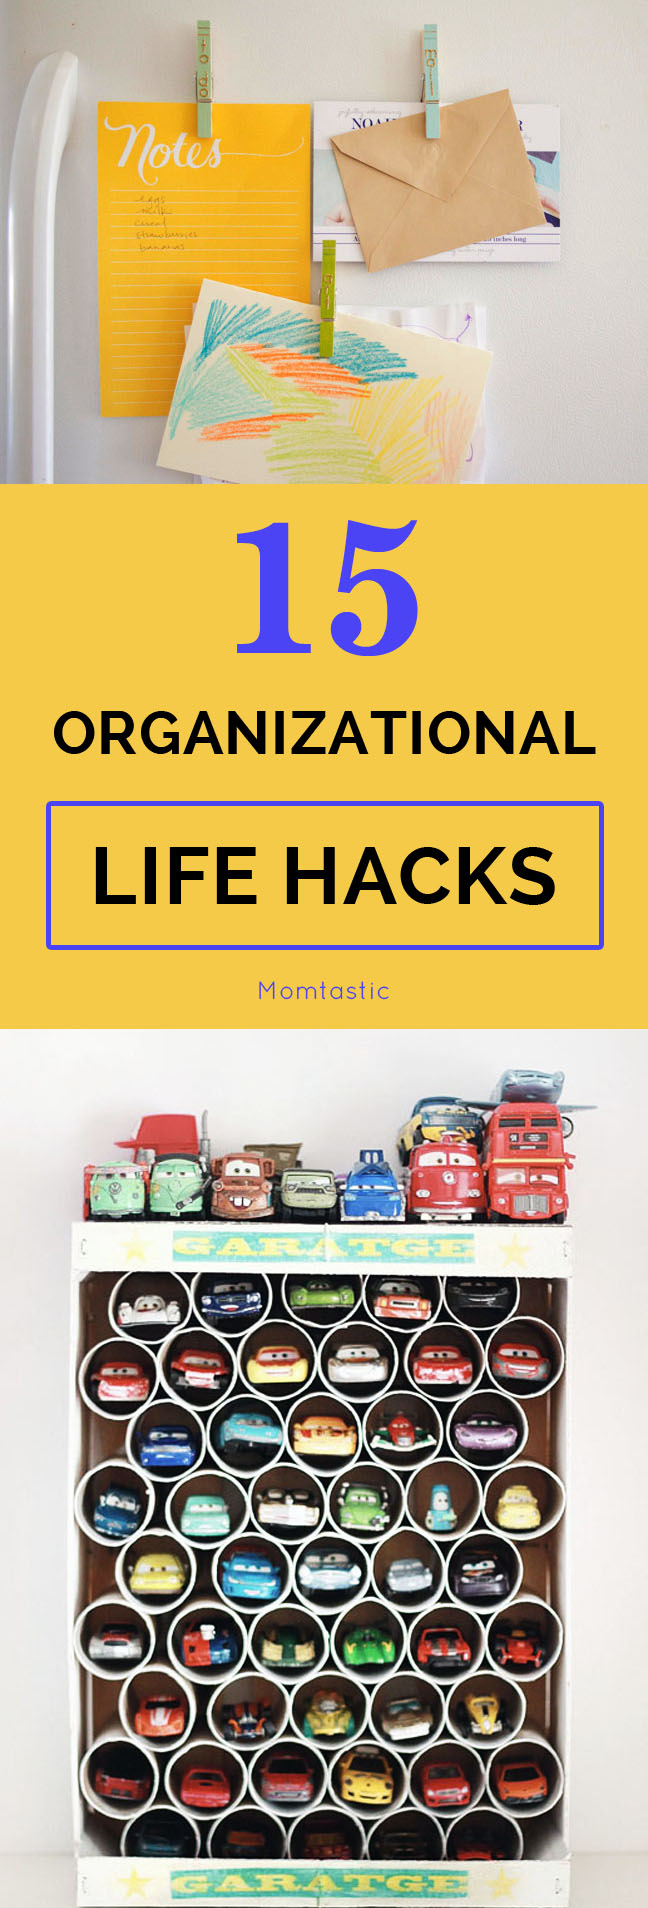 15_organizational_life_hacks